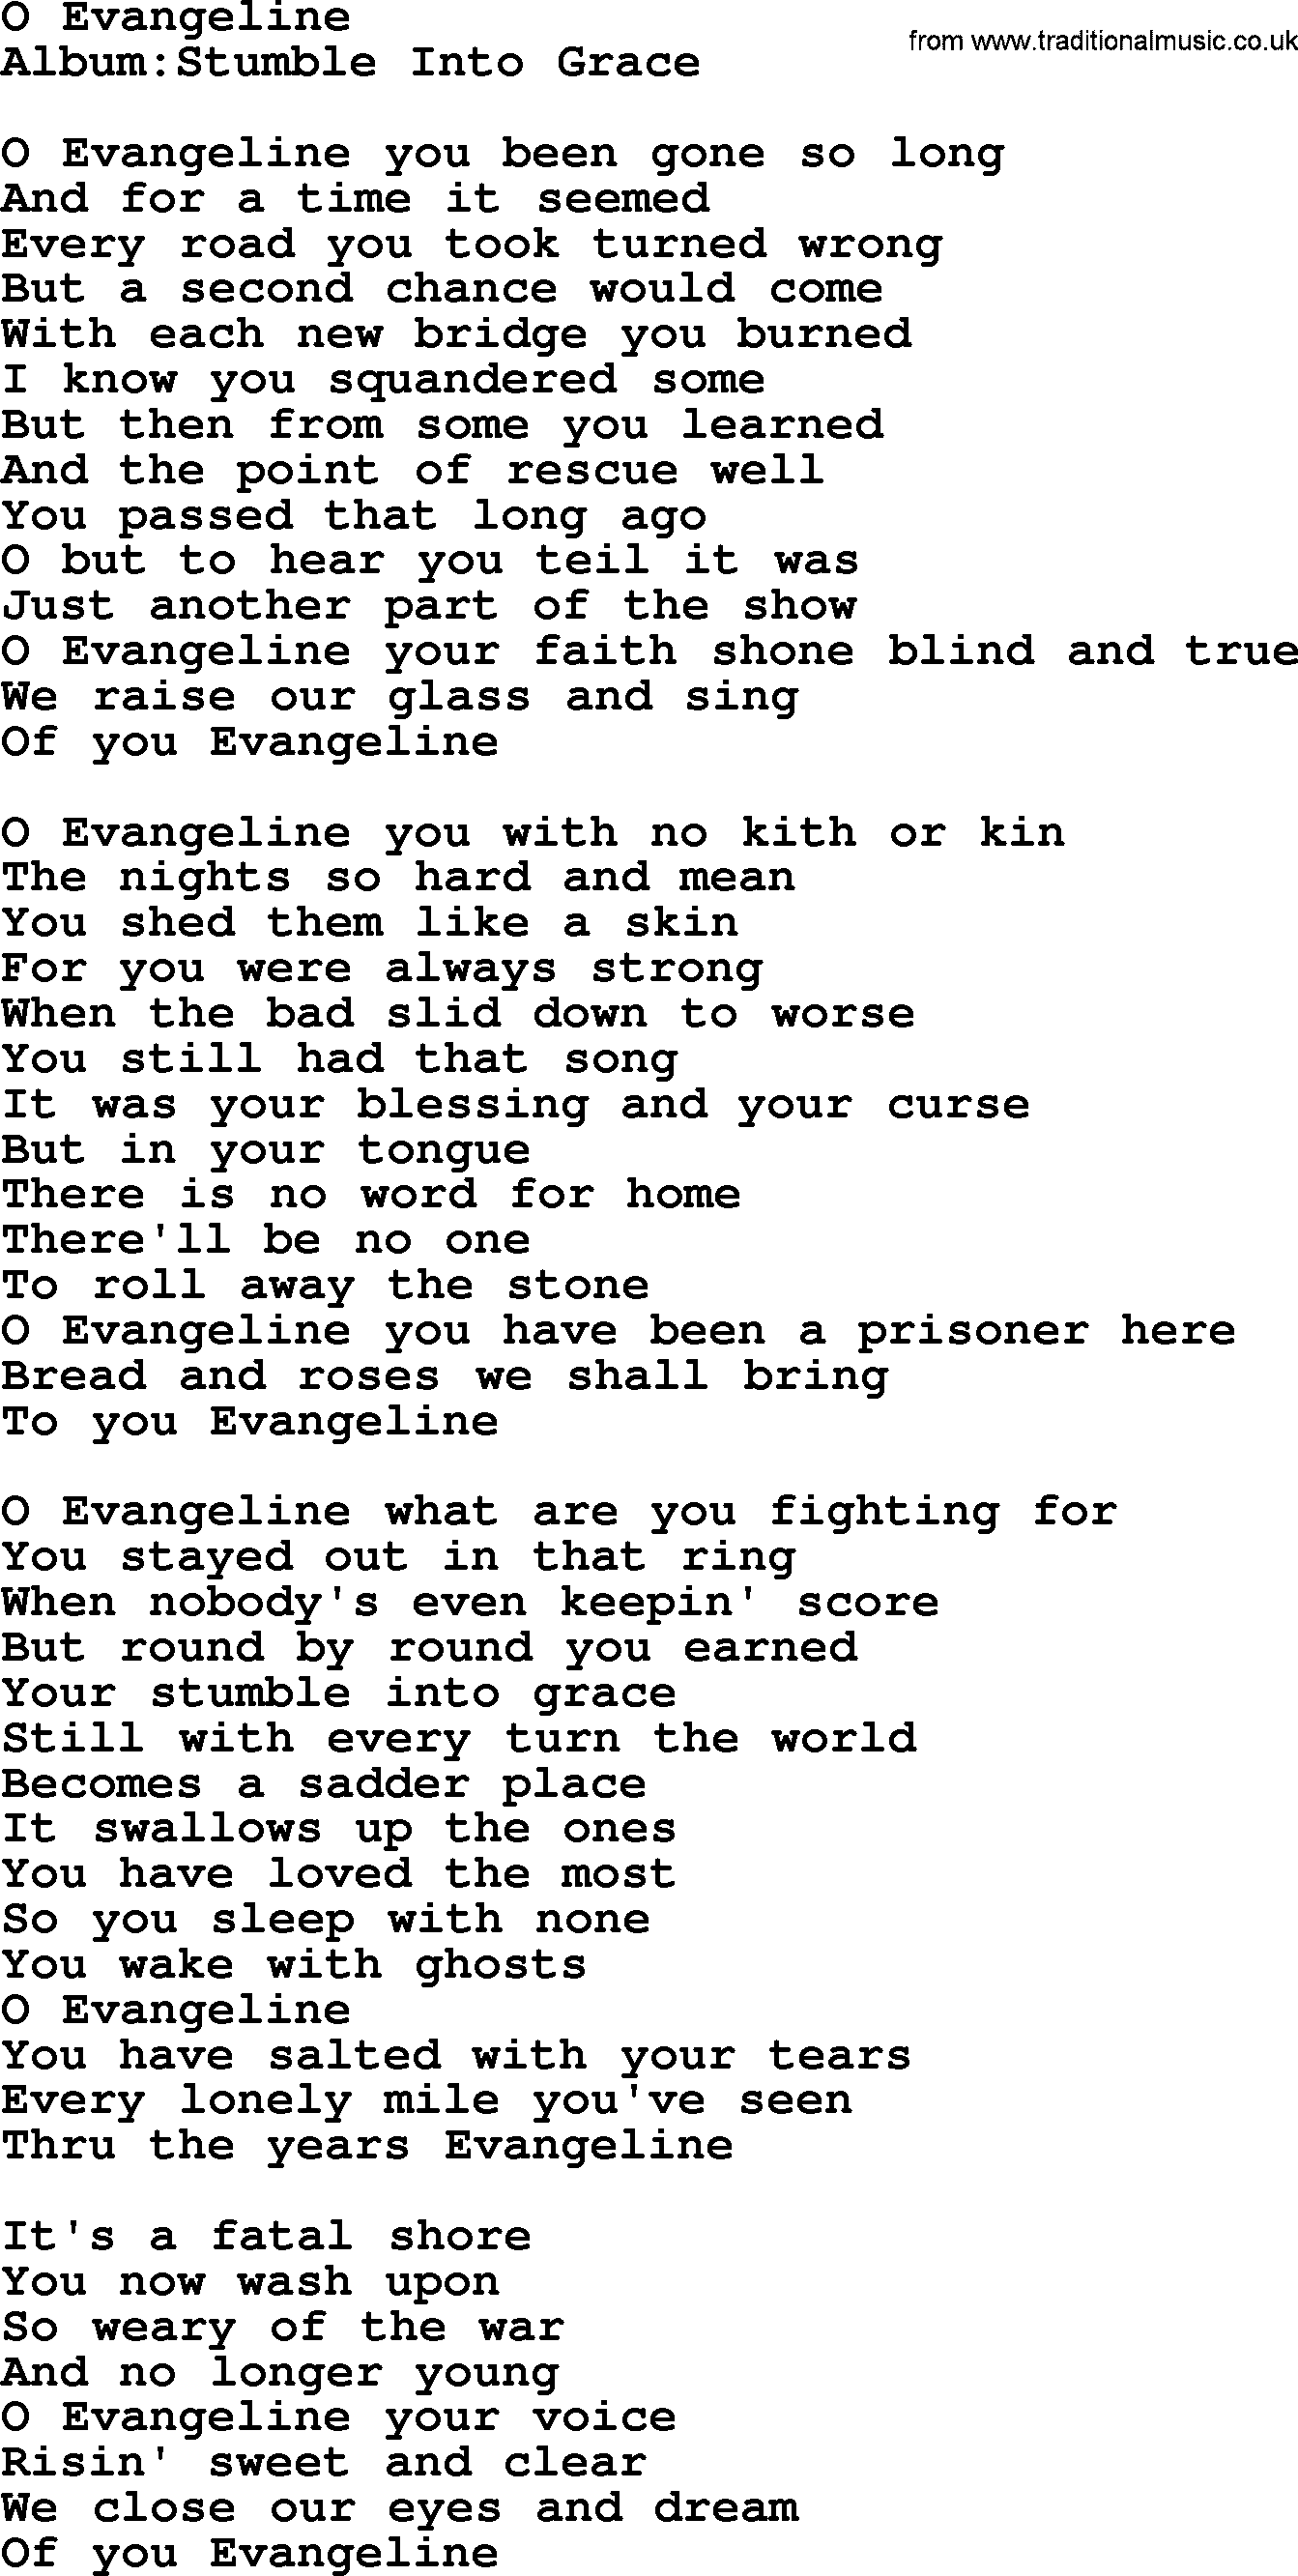 Emmylou Harris song: O Evangeline lyrics